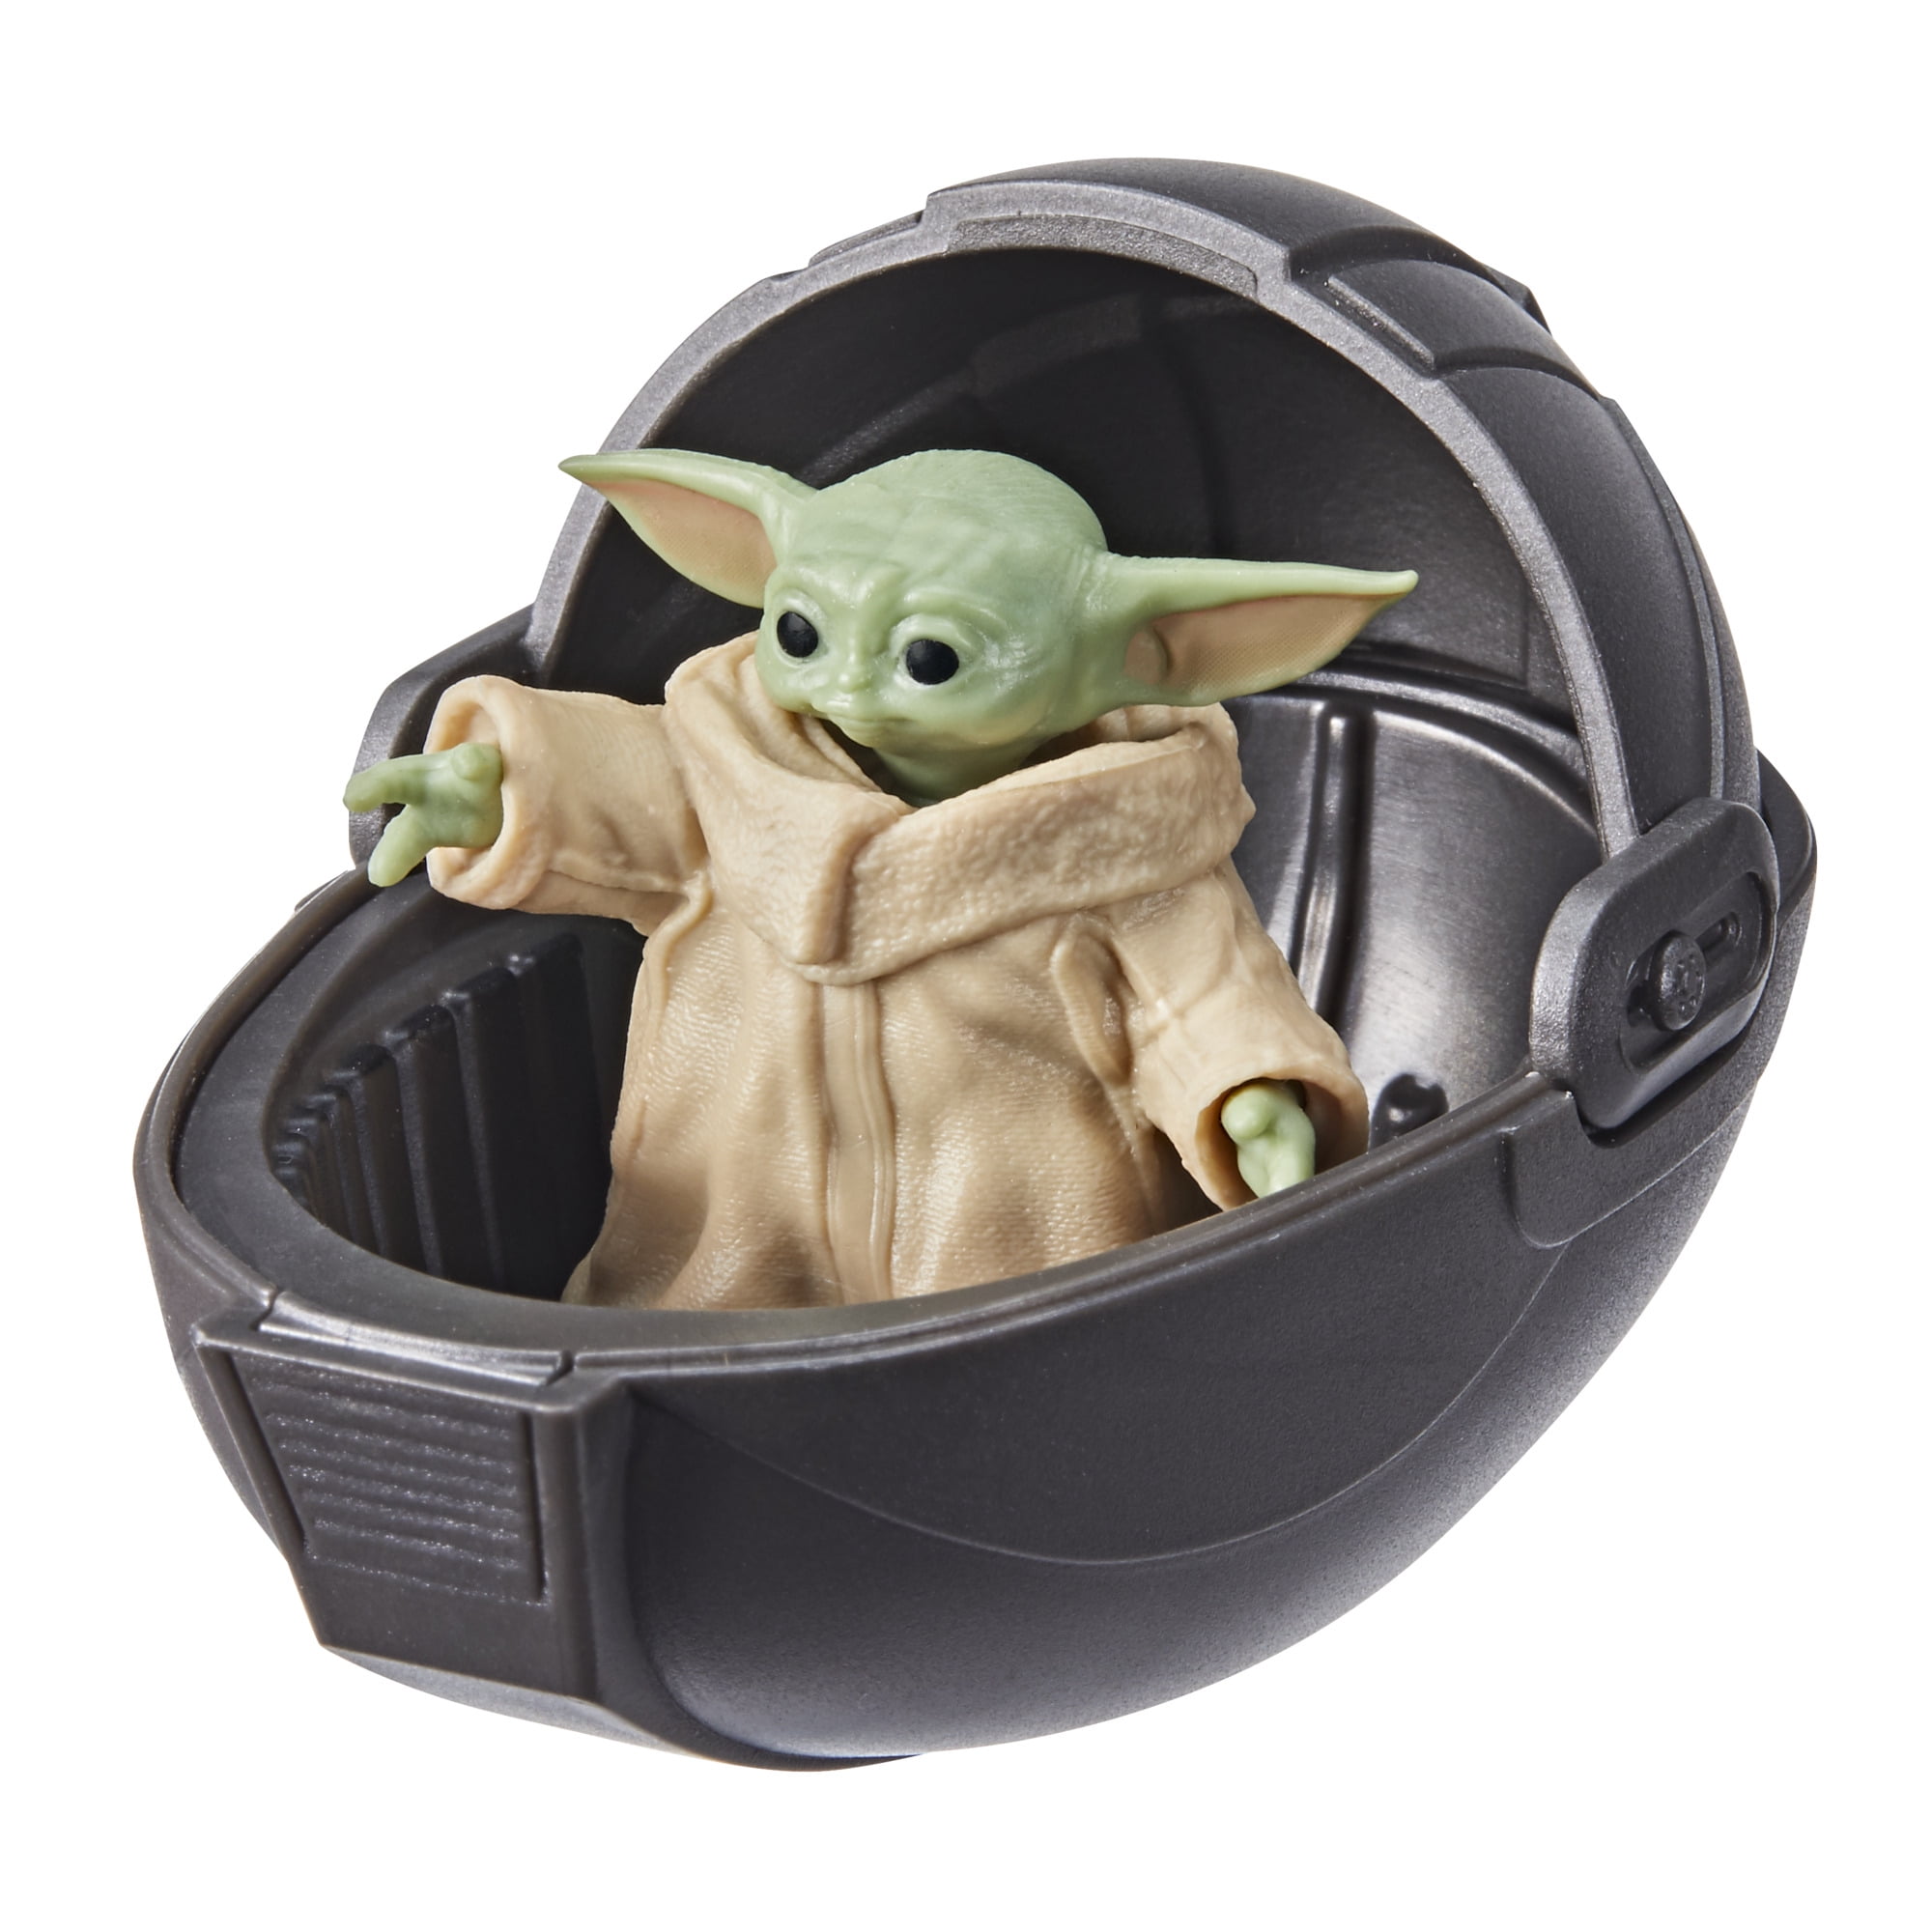 Baby Yoda Collectible Star Wars Mandalorian Jedi Master Action Figure Kids Toys 